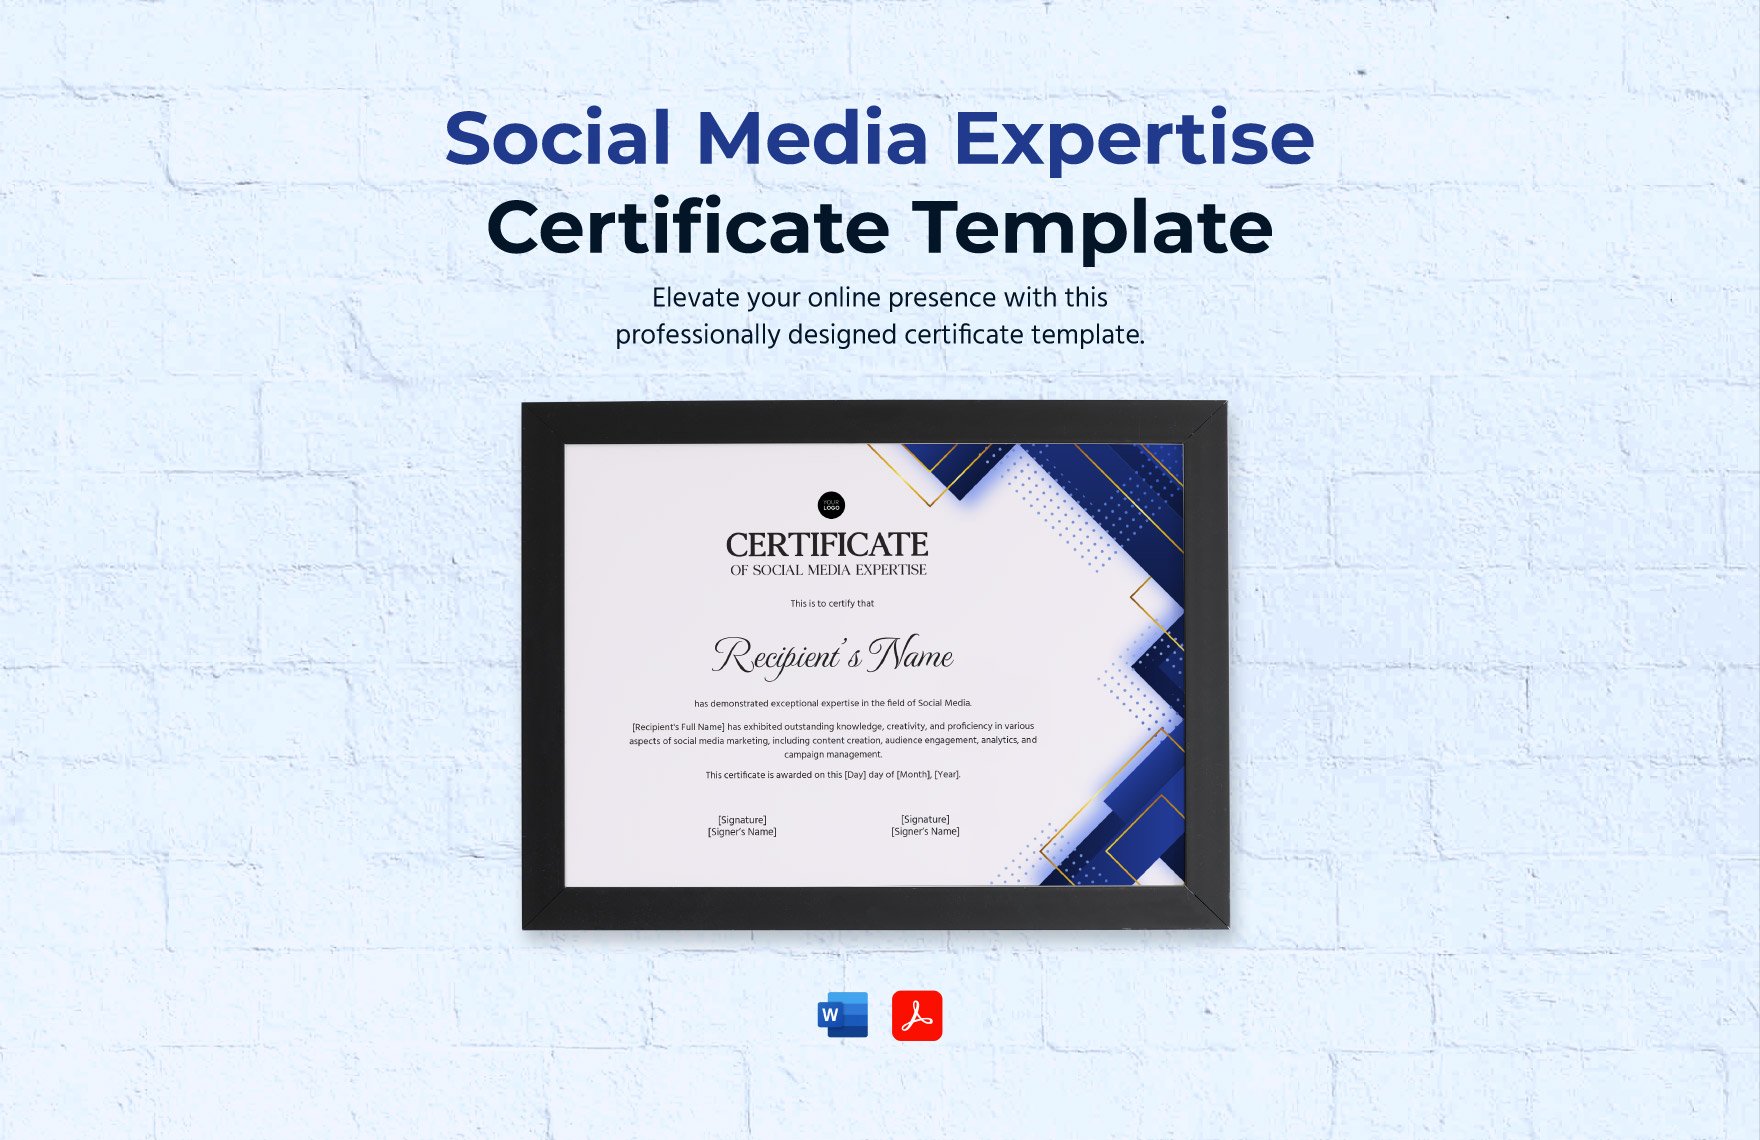 Social Media Expertise Certificate Template